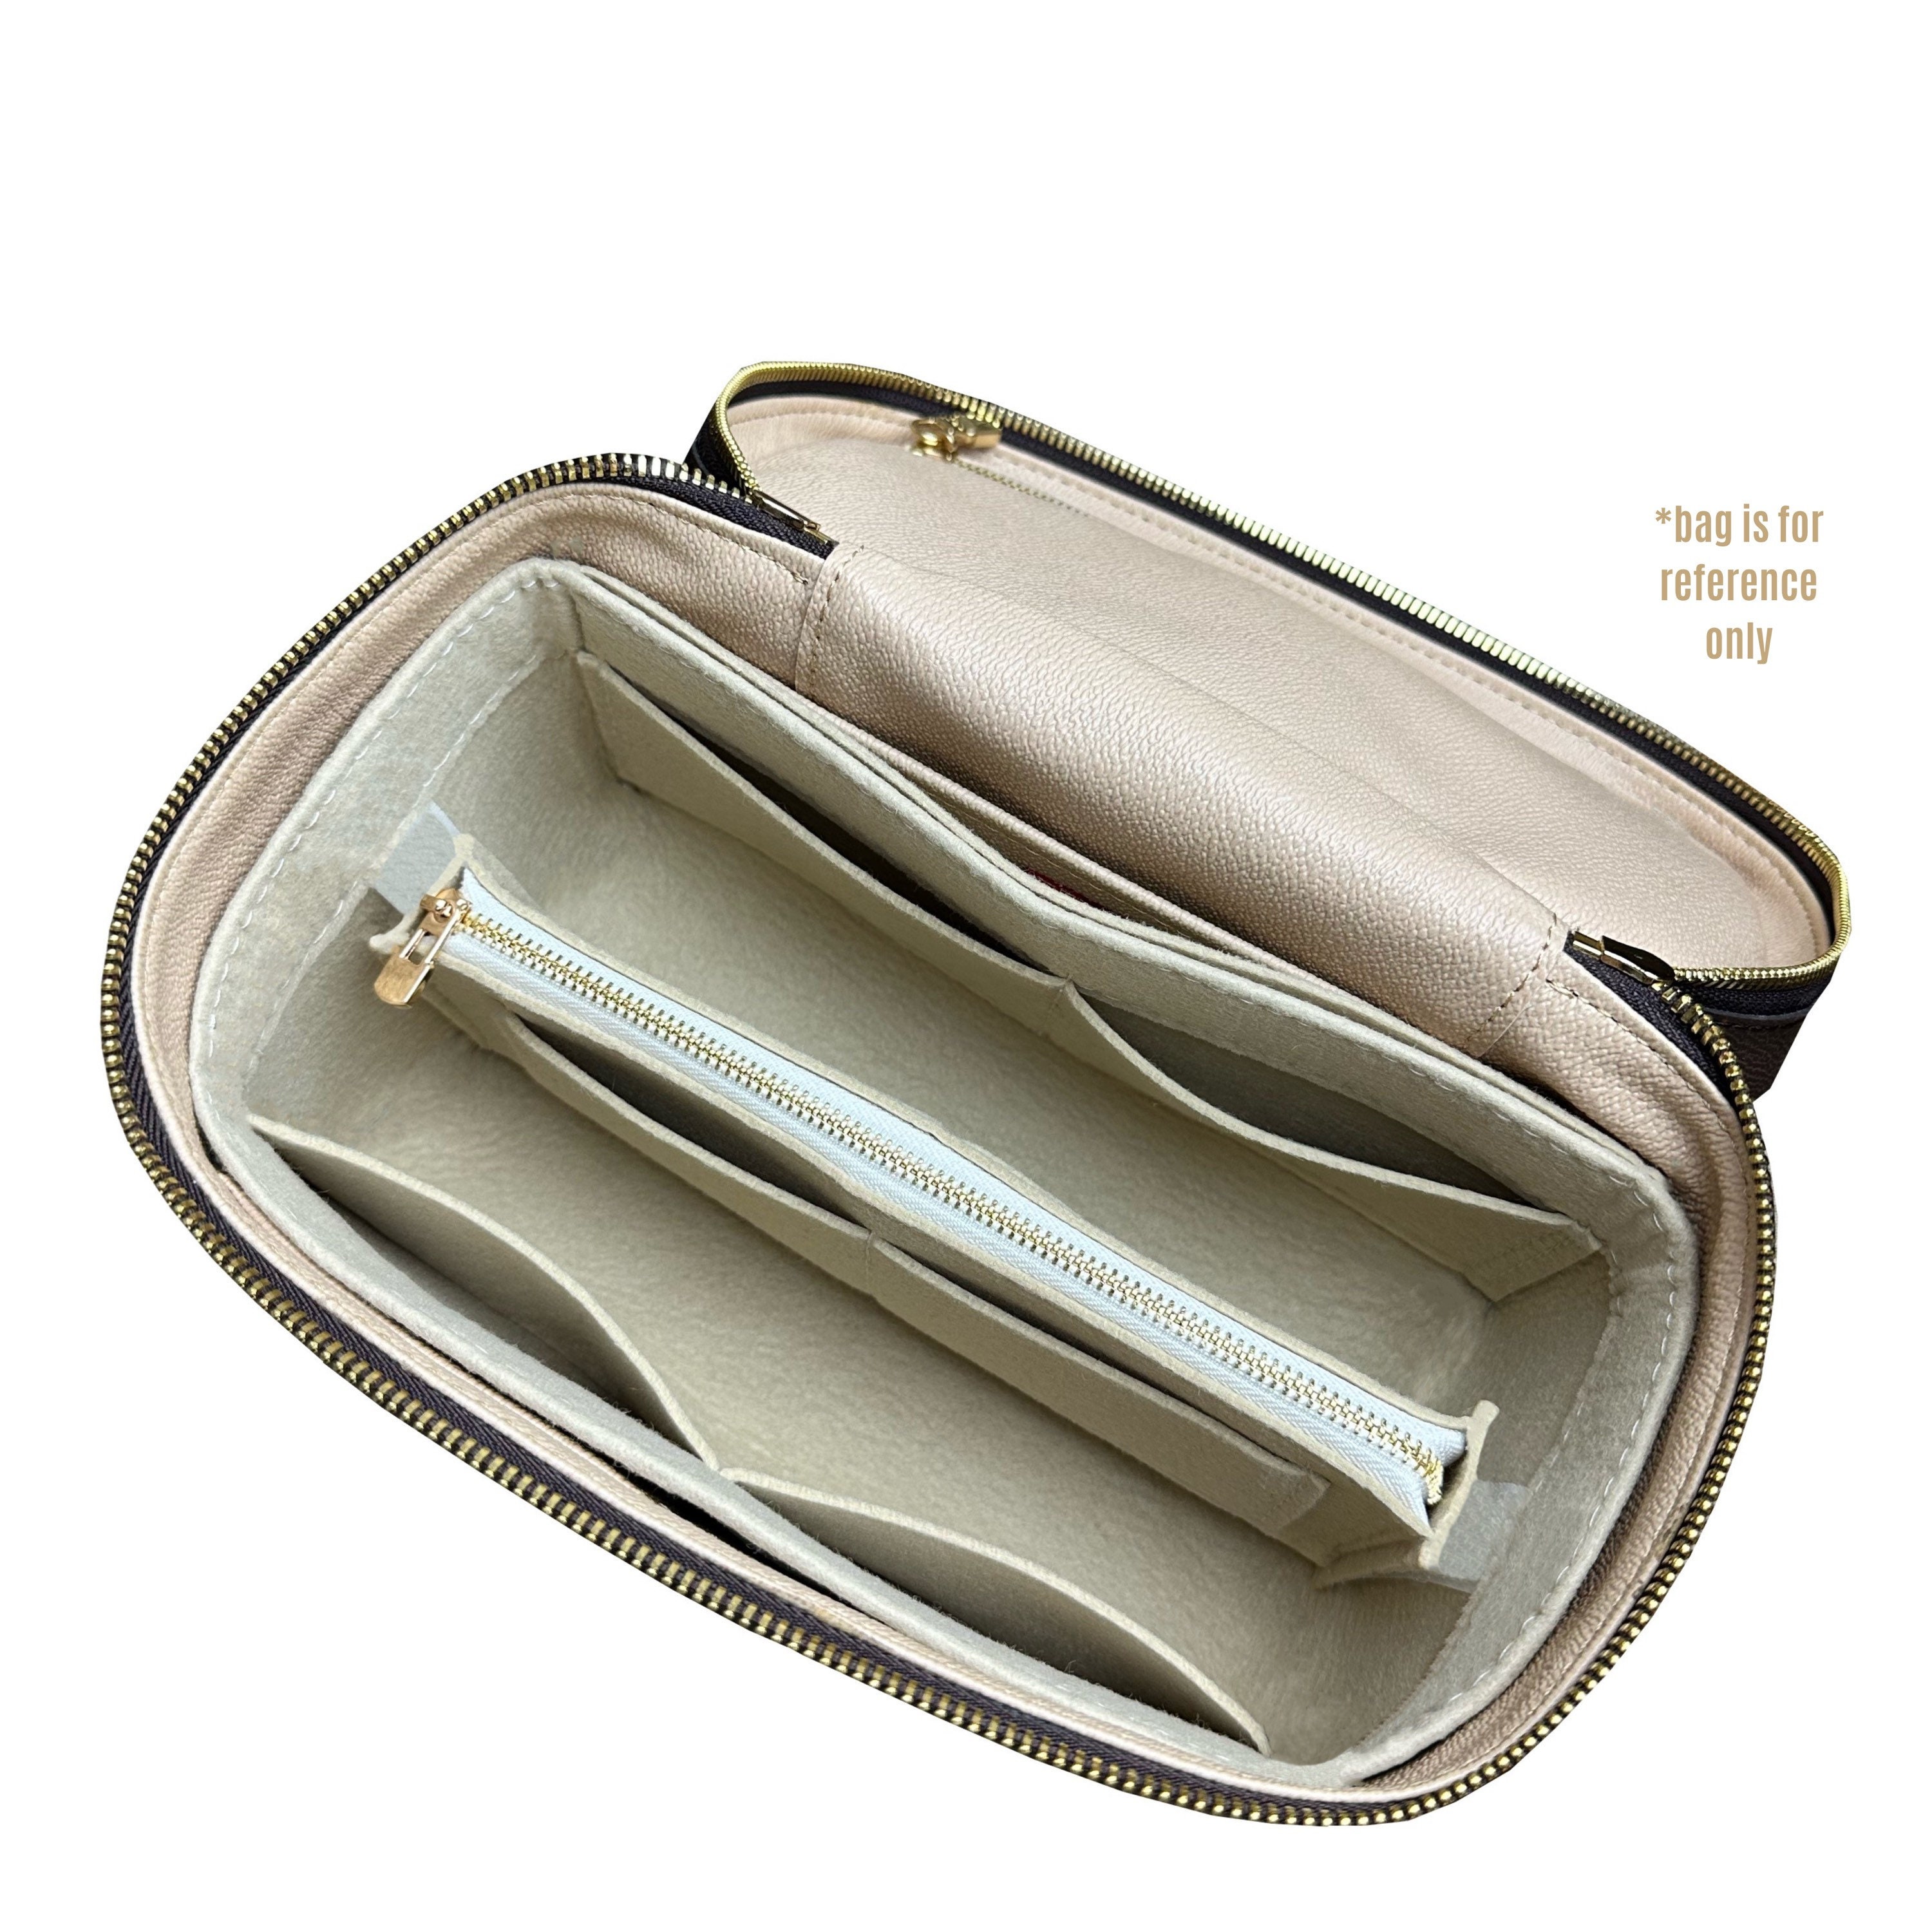 Louis Vuitton Vanity PM Bag Organiser liner Insert